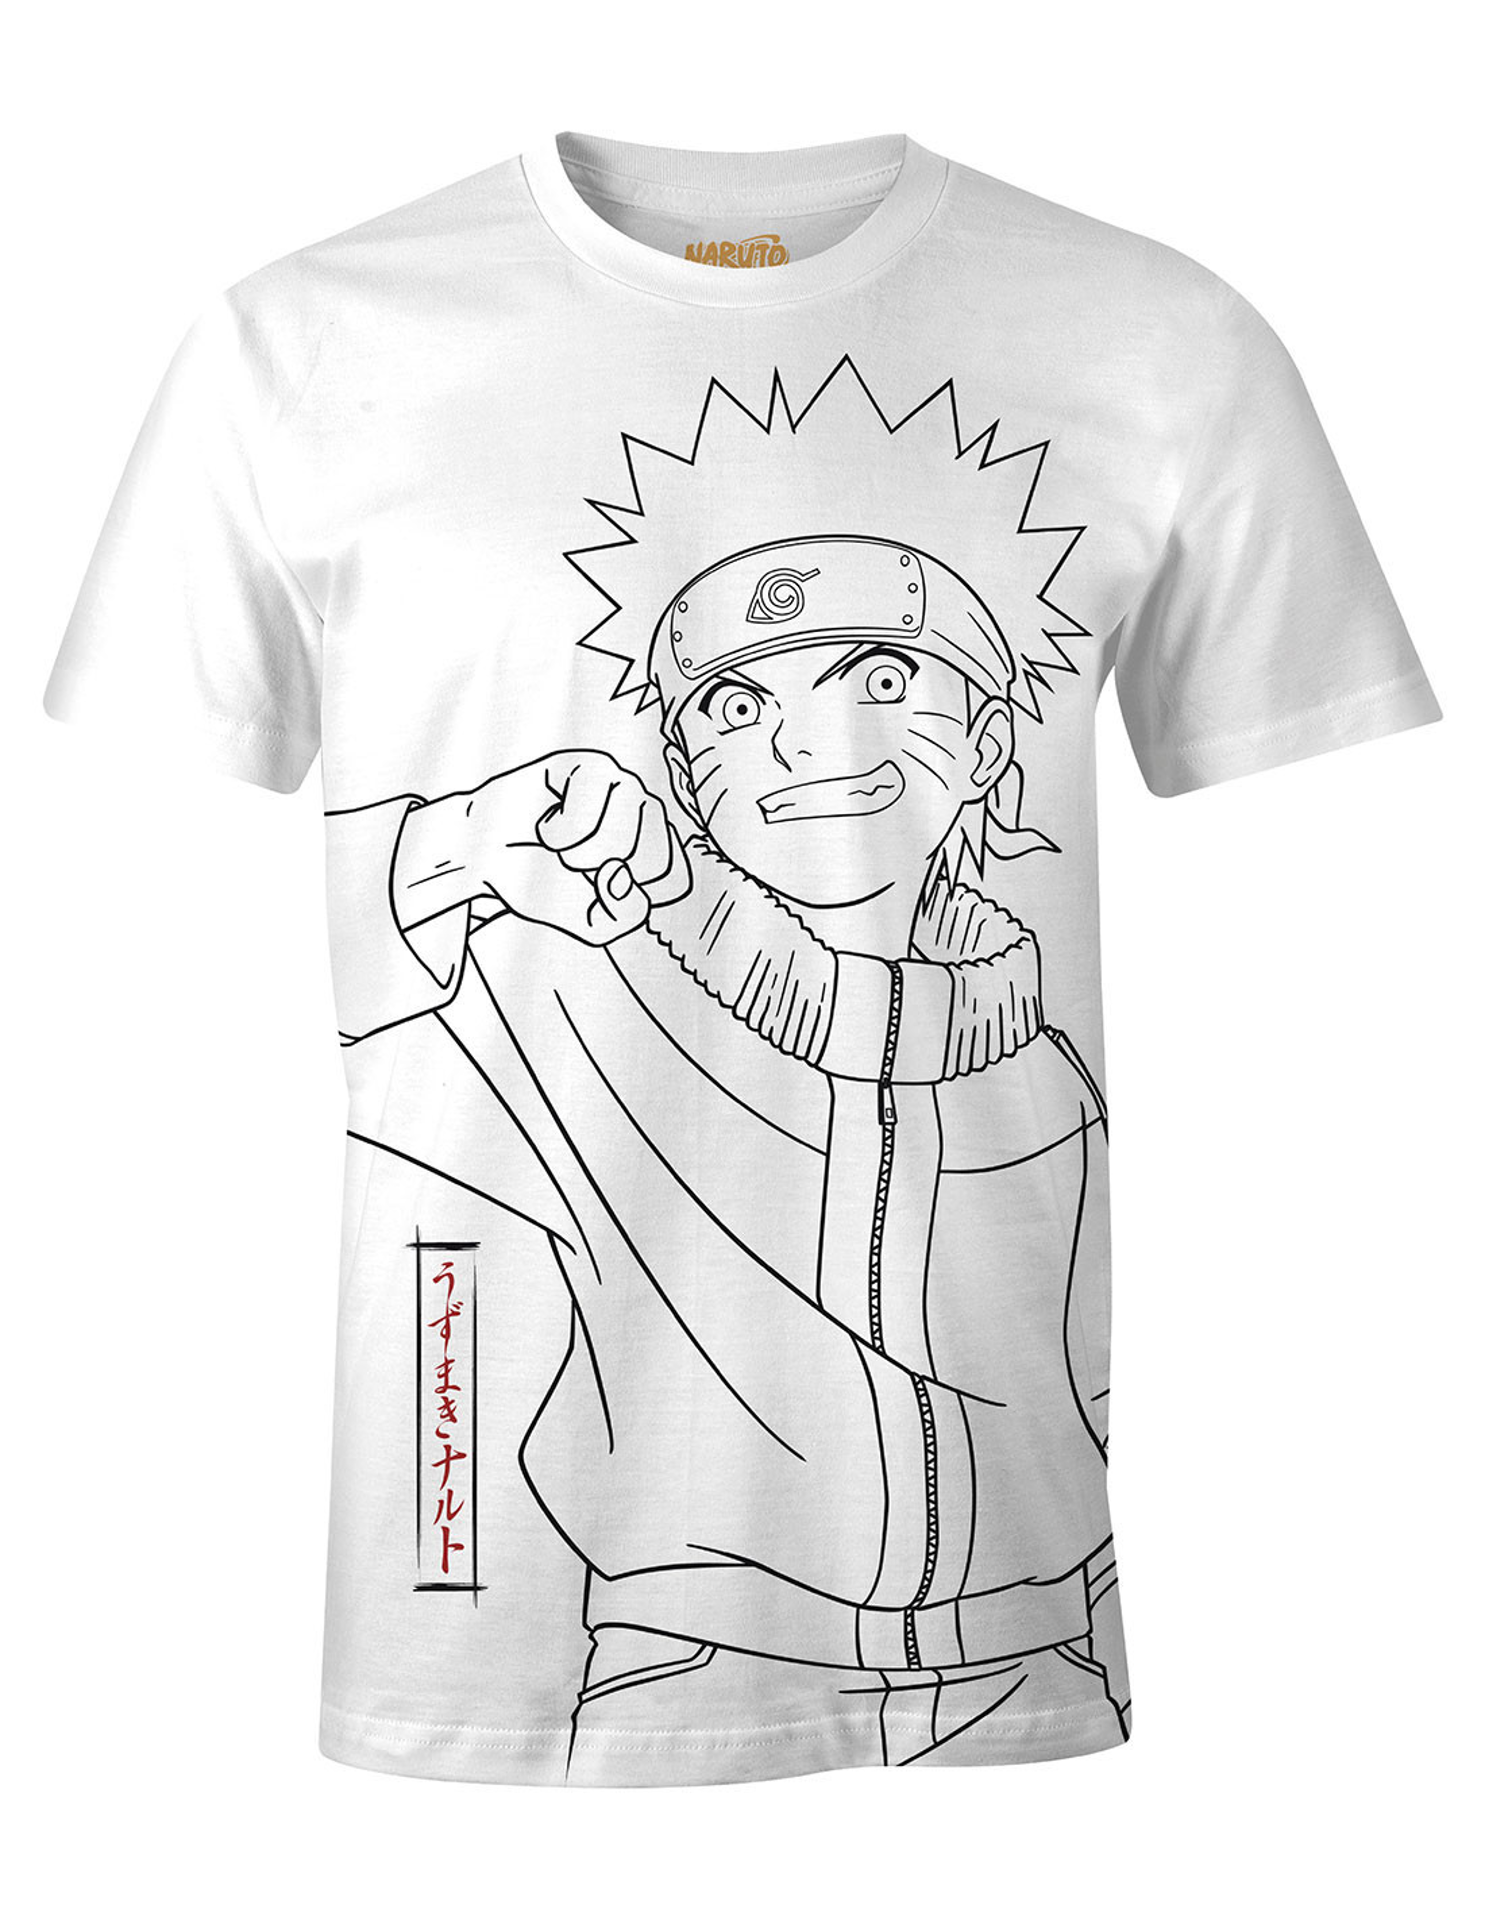 Naruto - T-shirt Blanc "Japanese Art" - L